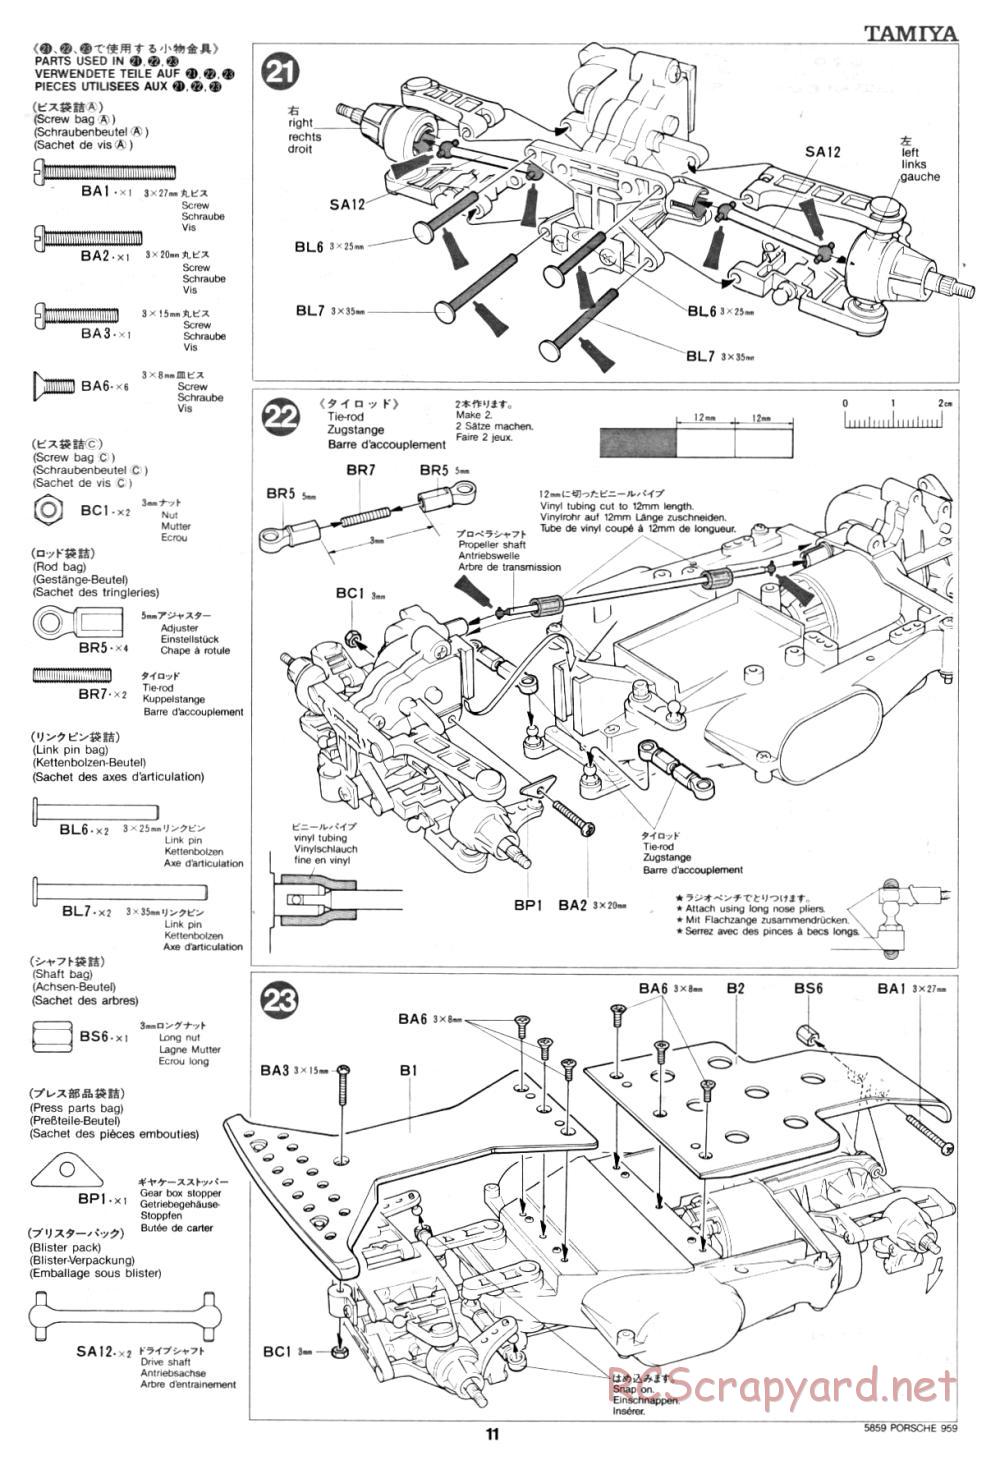 Tamiya - Porsche 959 - 58059 - Manual - Page 11